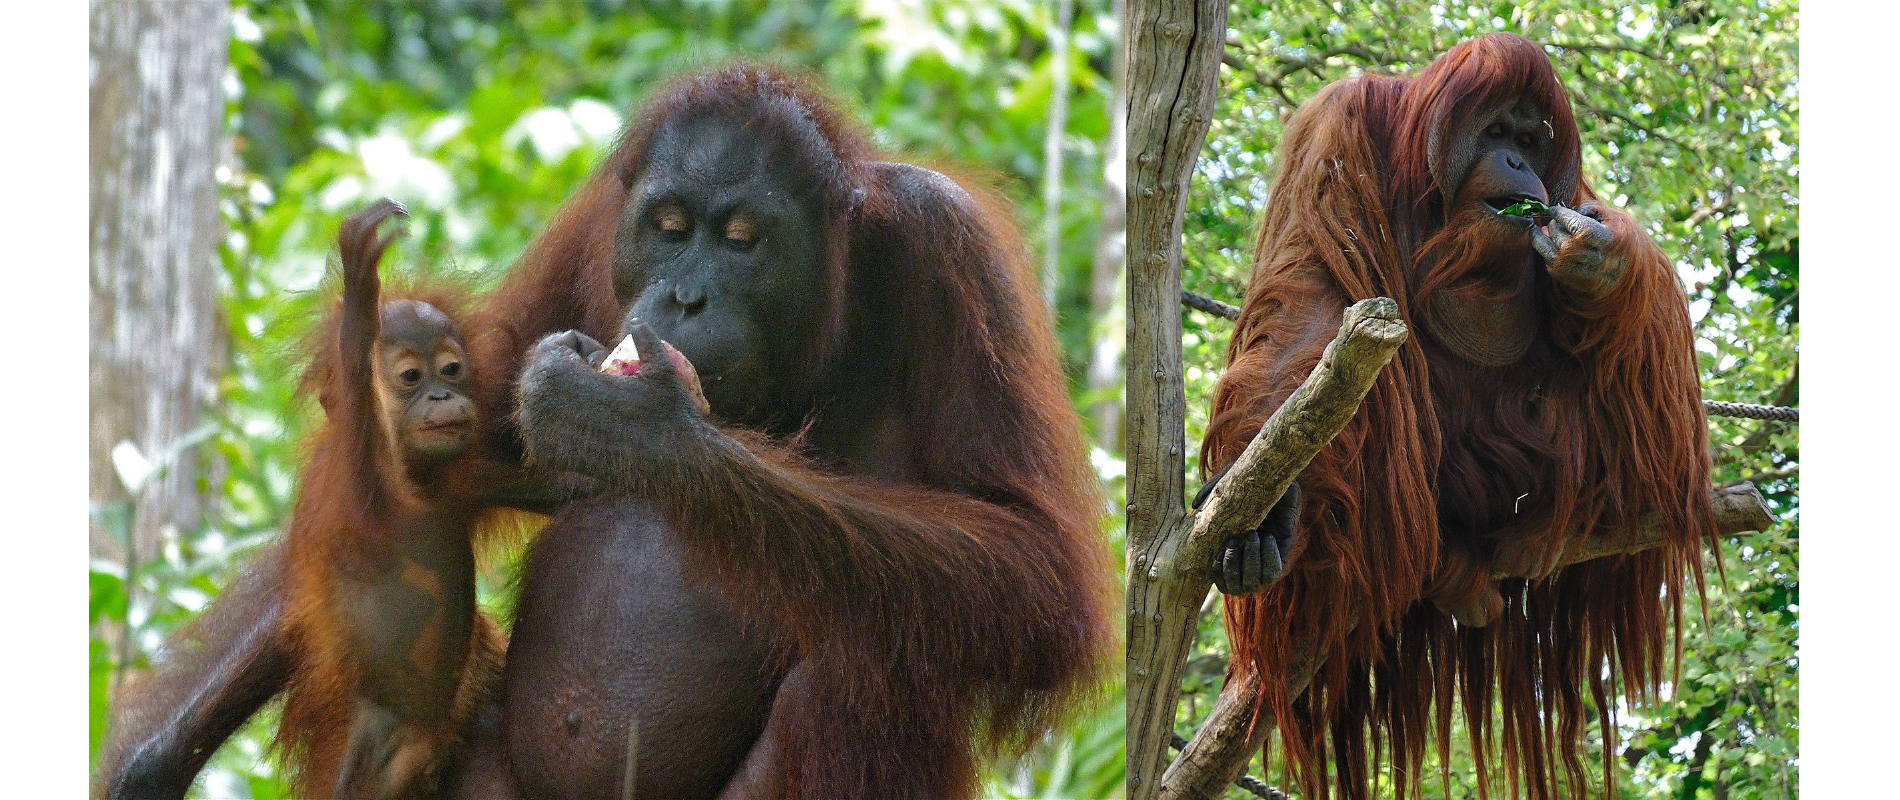 a. Female orangutan with infant. b. Male orangutan in a tree.